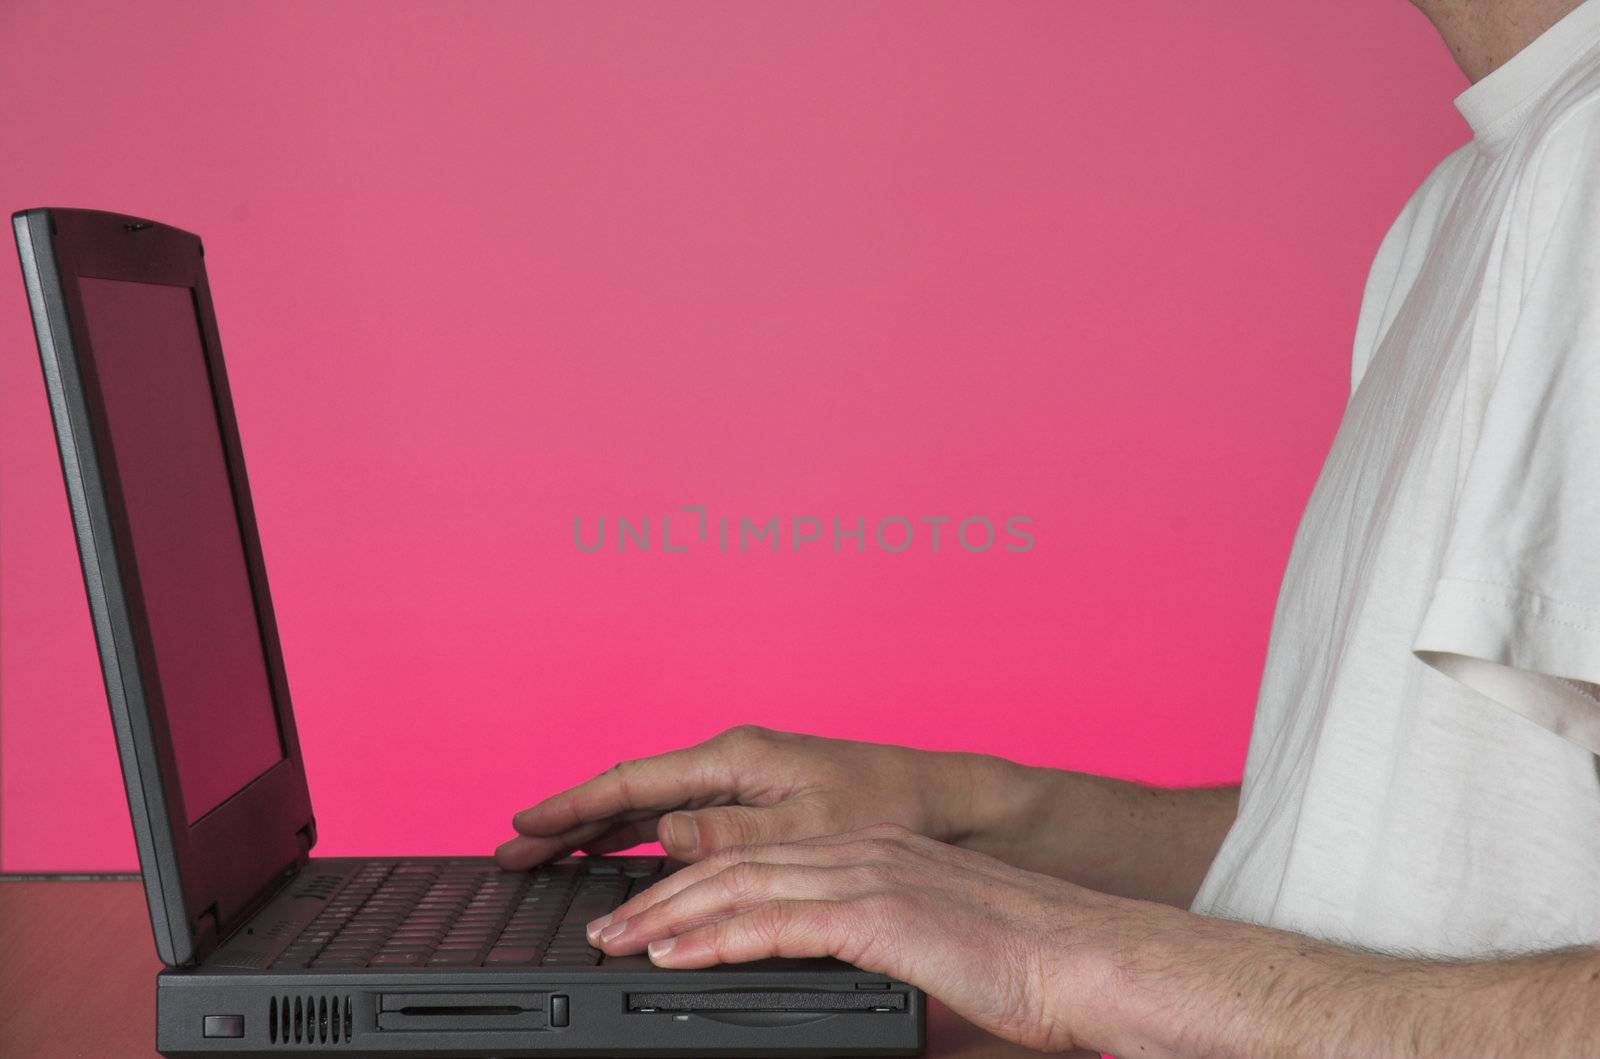 Man in white tshirt working on laptop computer.